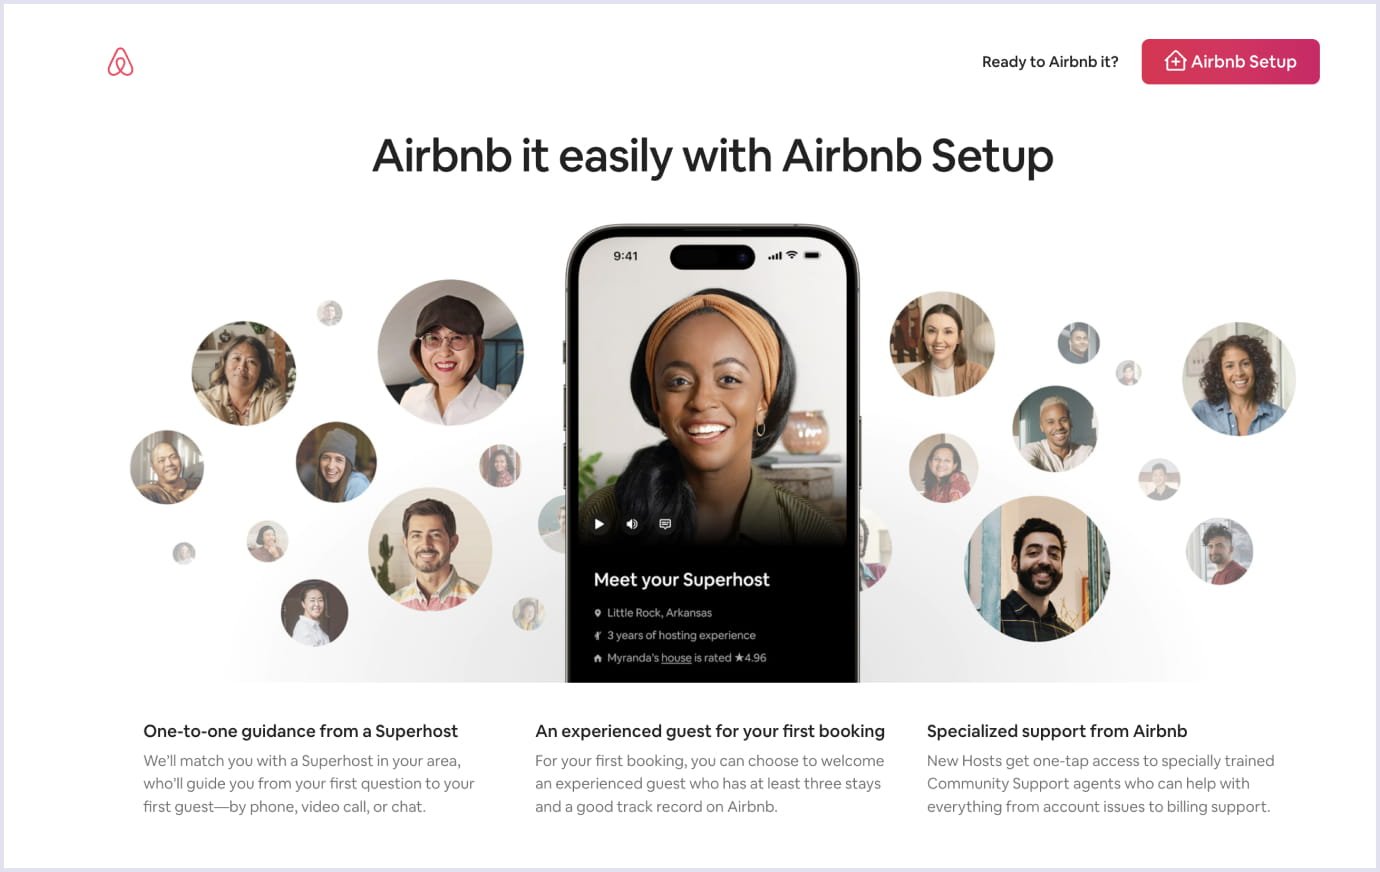 Airbnb website design principles